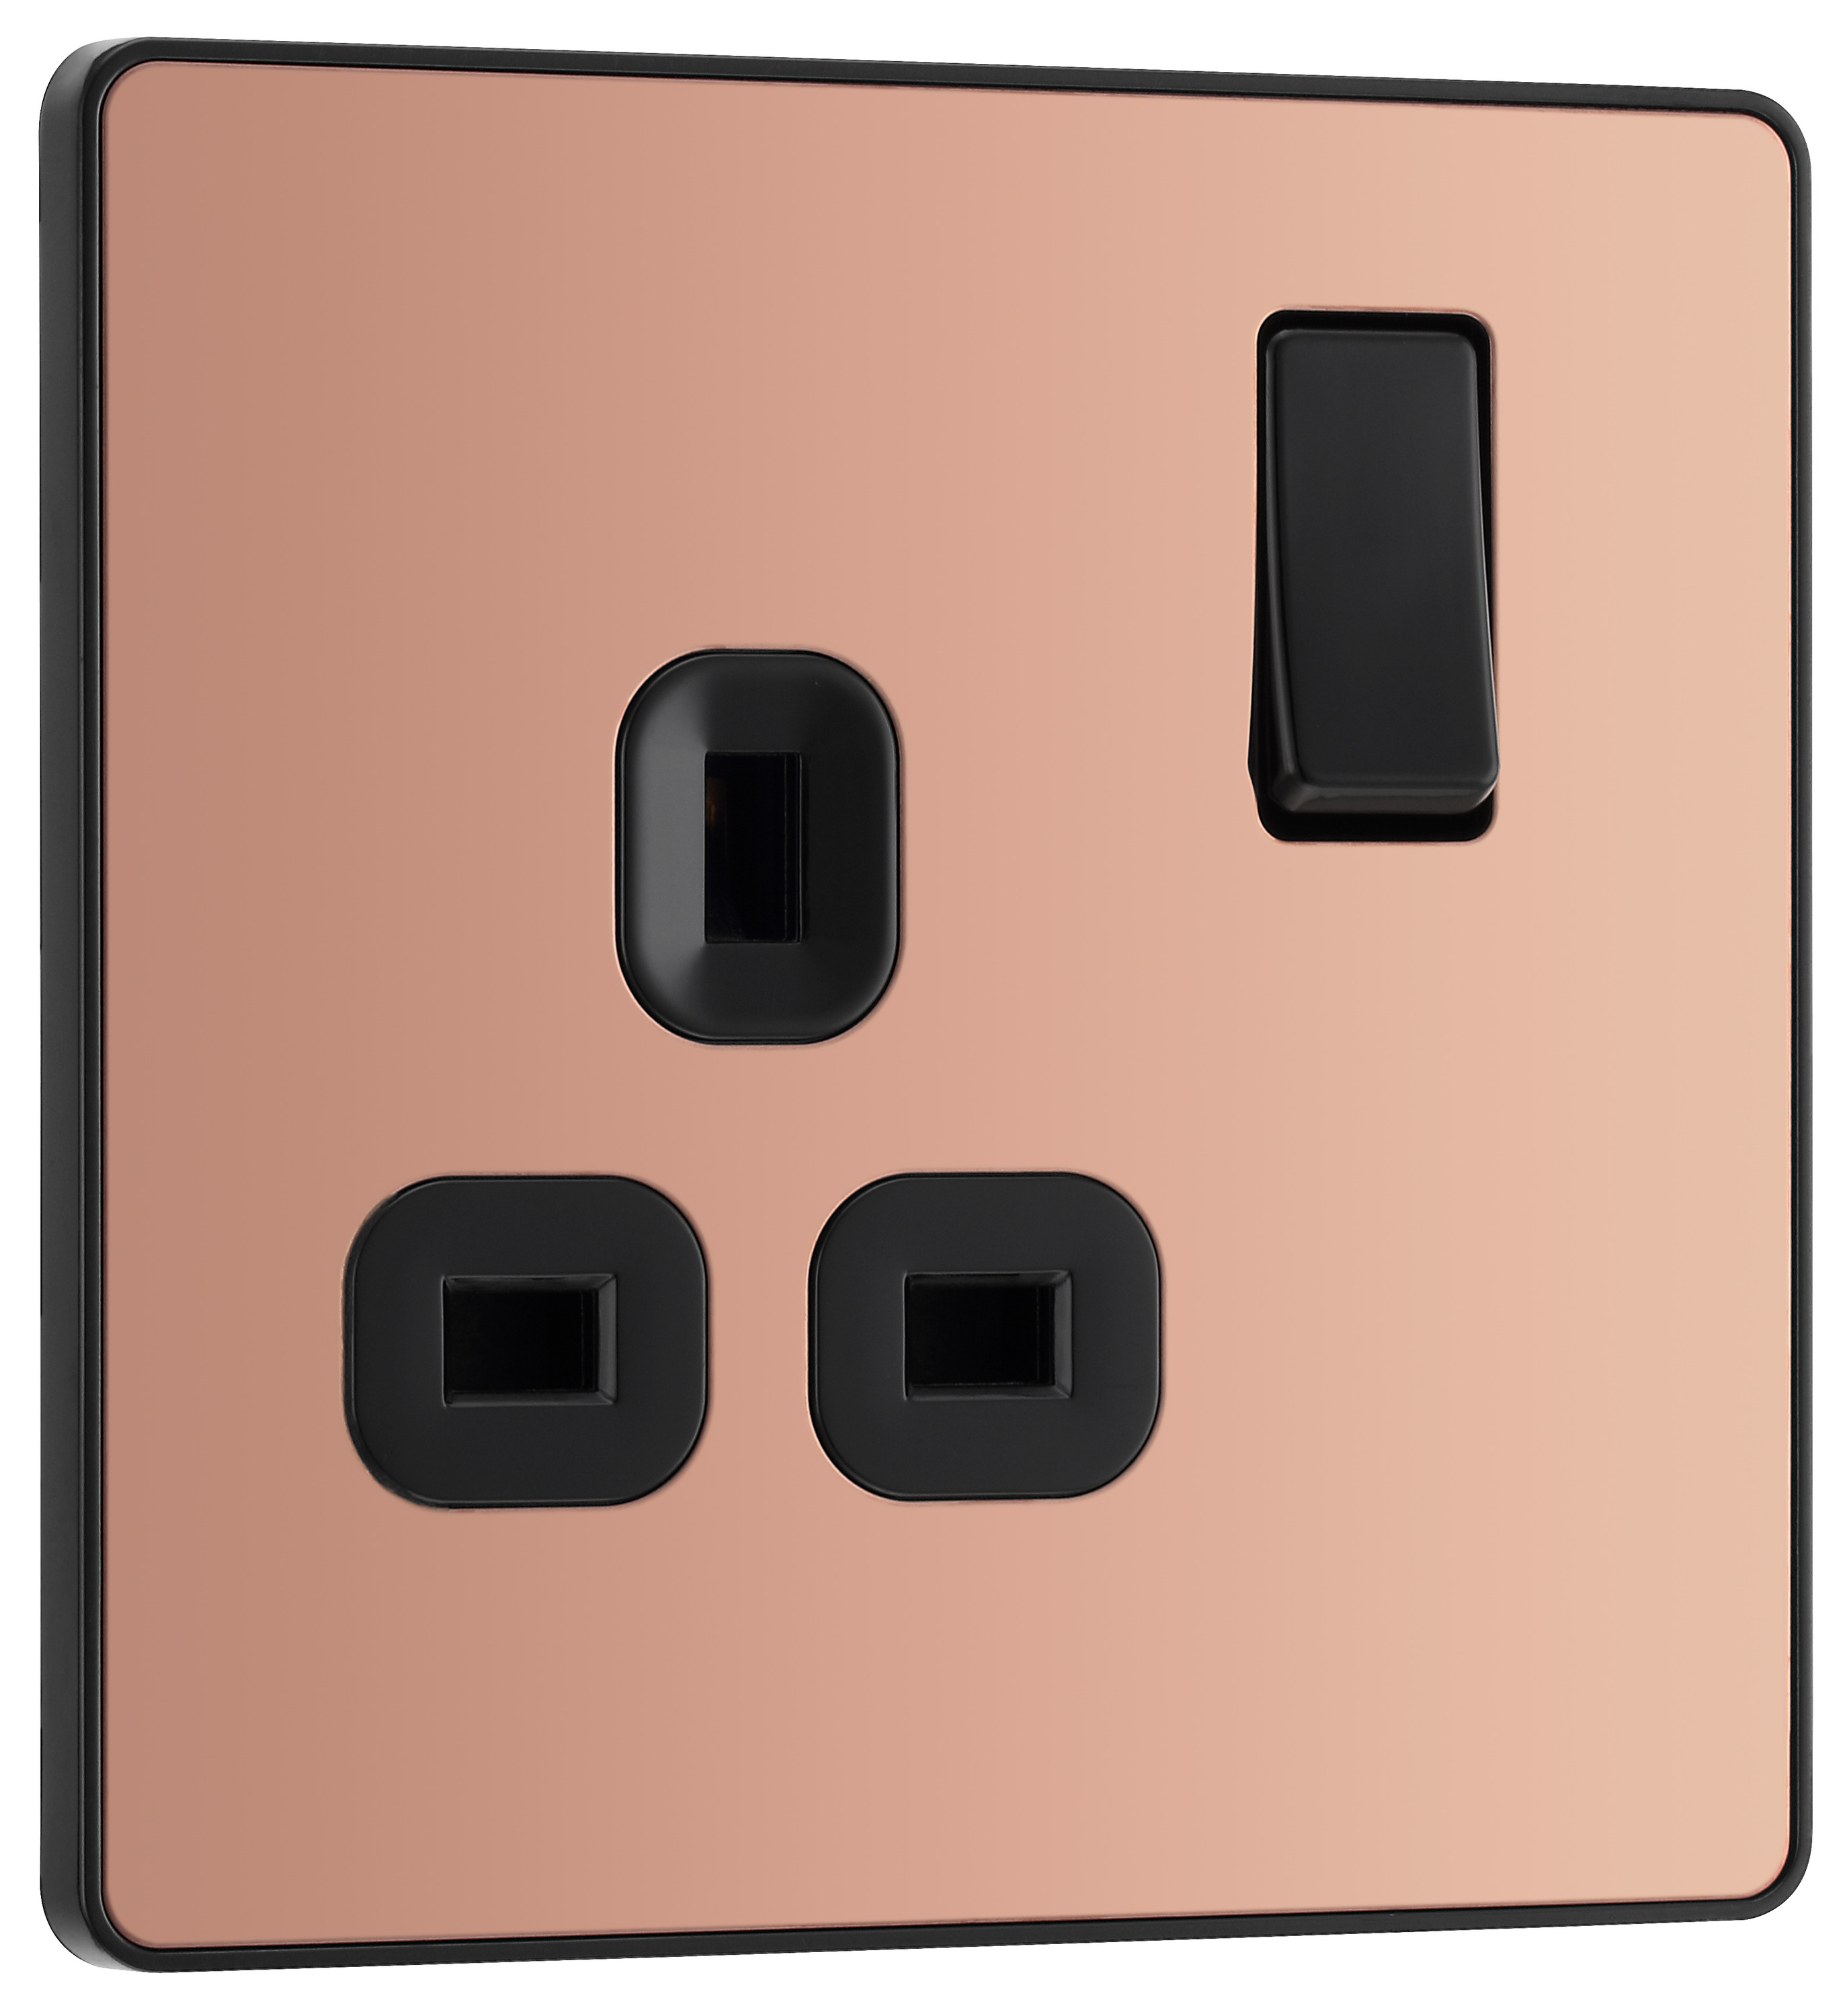 BG Evolve Polished Copper 13A Single Switched Power Socket